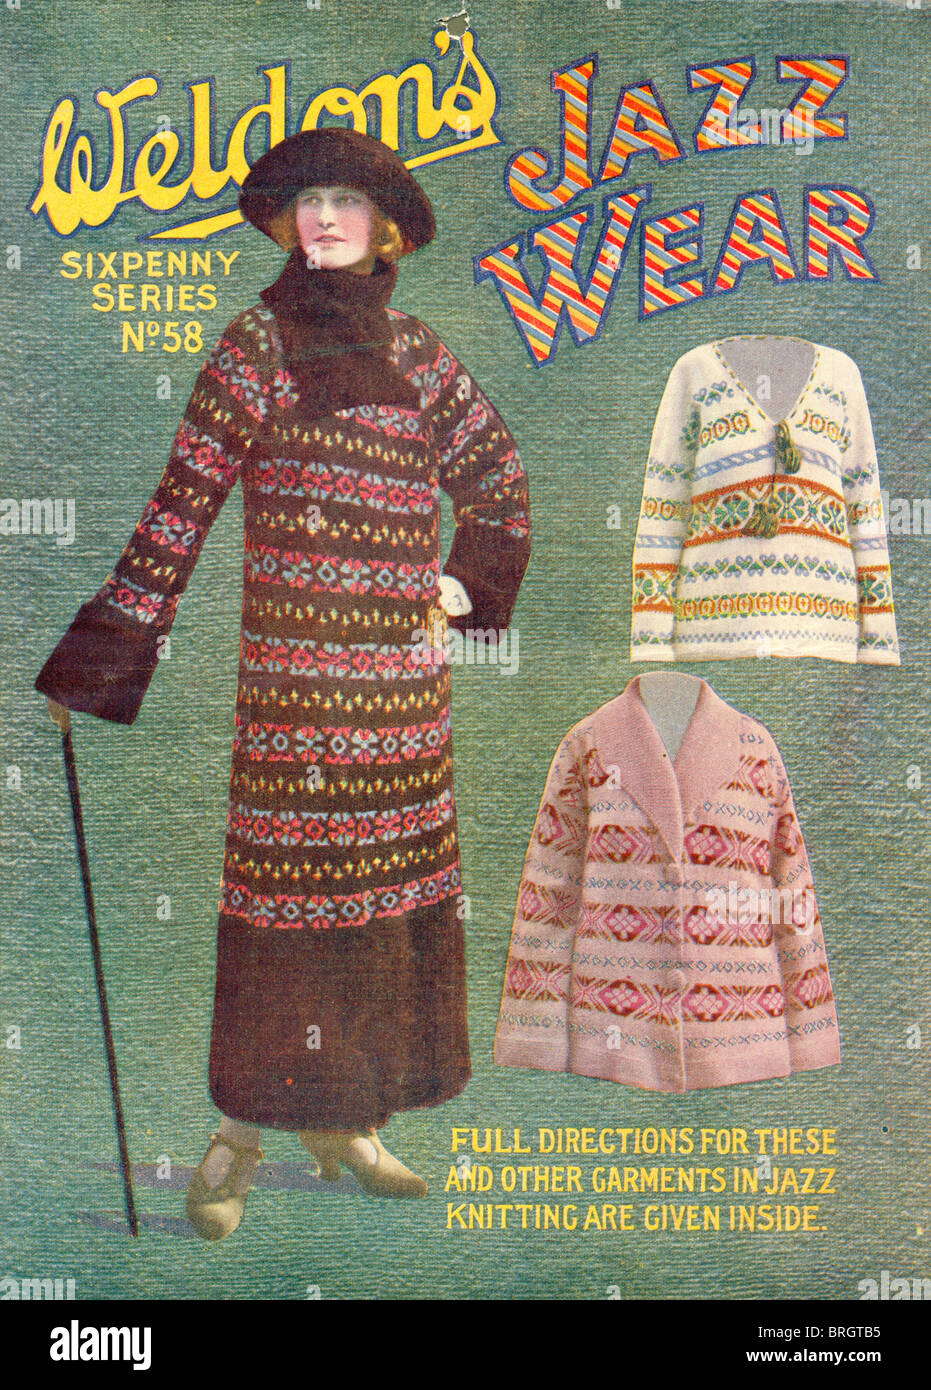 Weldon's Sixpenny Series Jazz Wear knitting  1924 Stock Photo